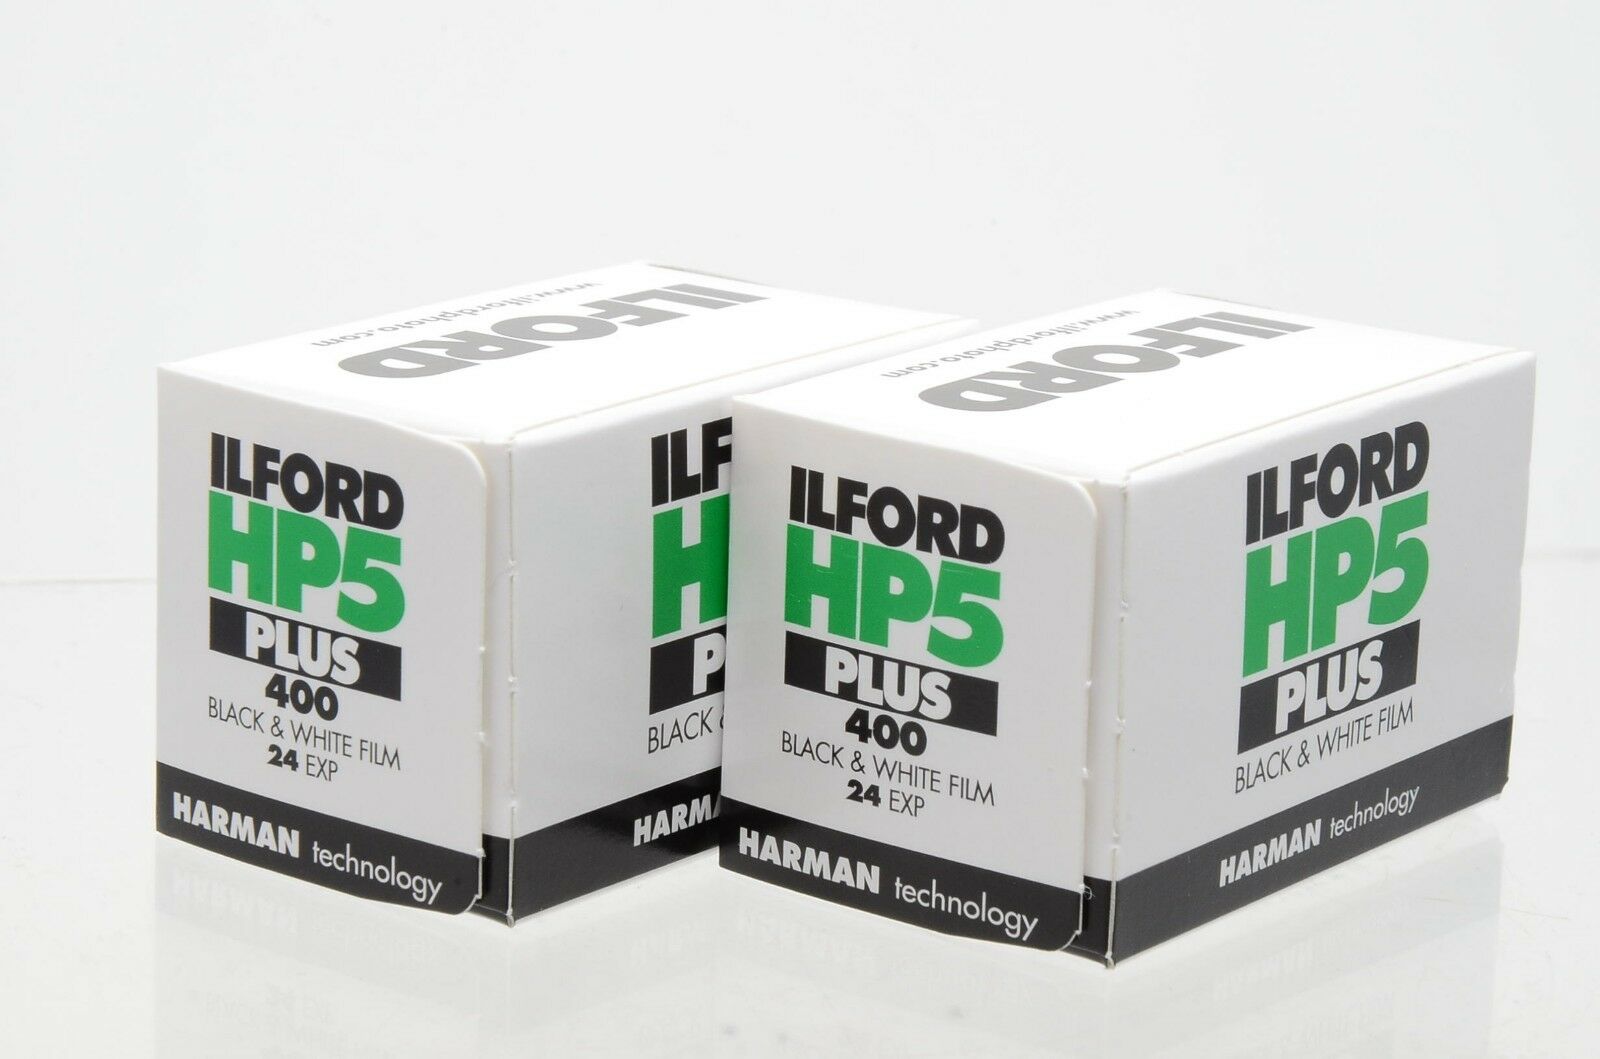 Ilford HP5 plus 400 Black & White 35mm Film -24 exp